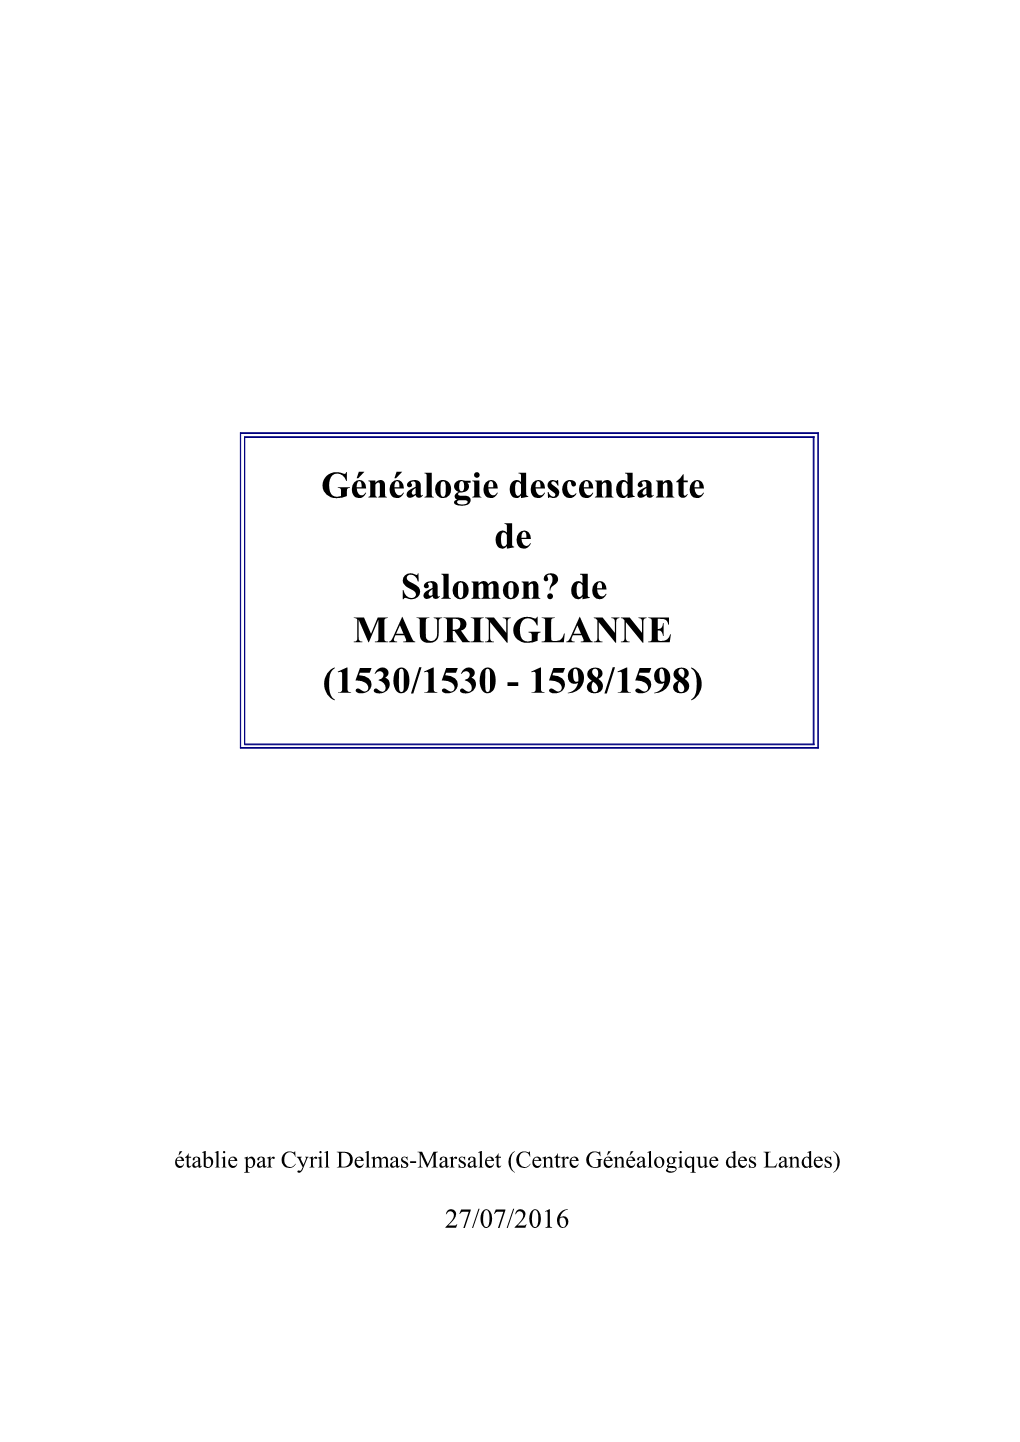 Généalogie Descendante De Salomon? De MAURINGLANNE (1530/1530 - 1598/1598)